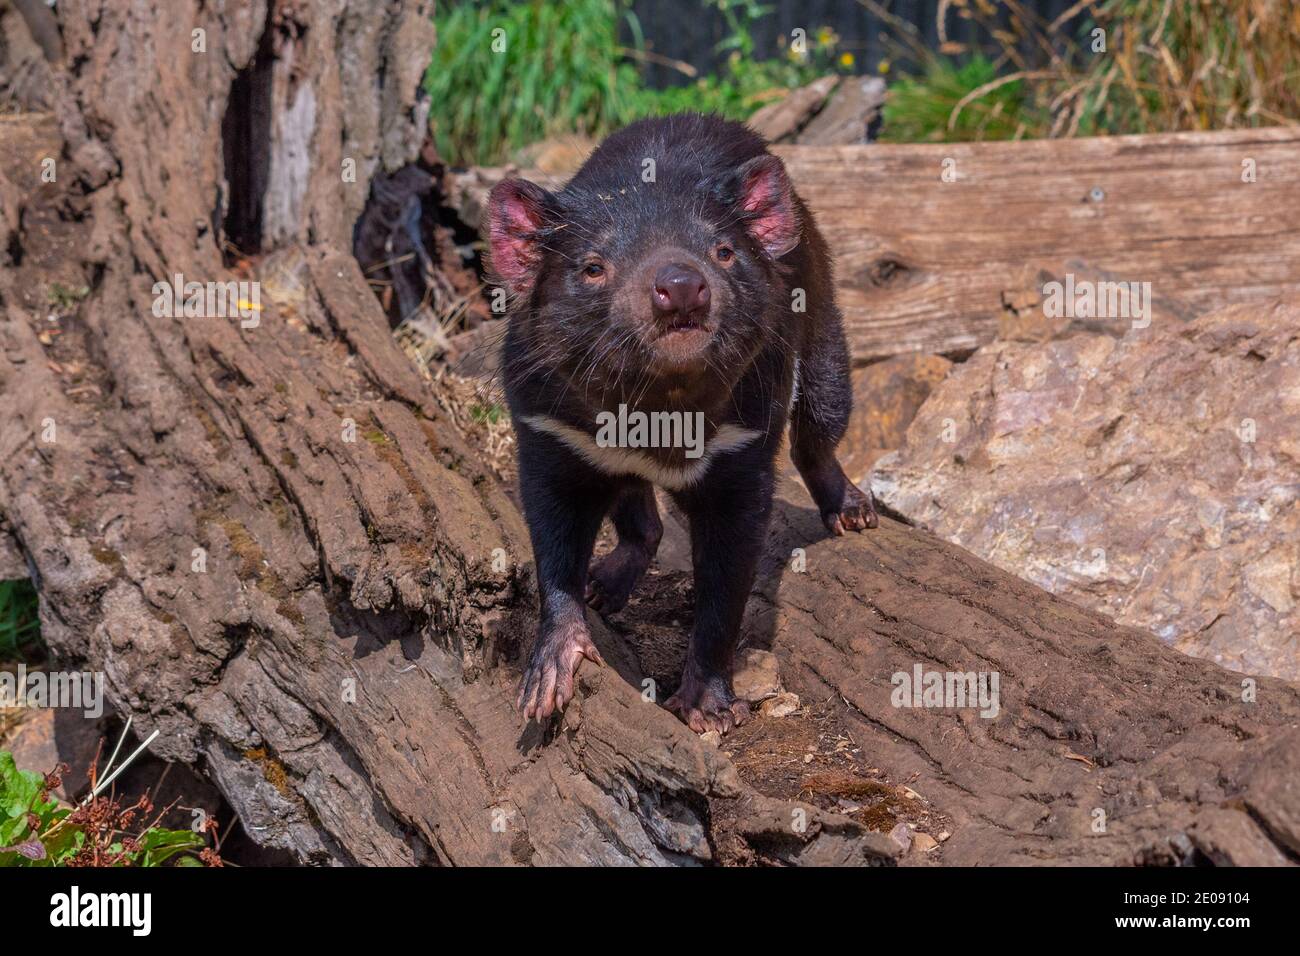 Sarcophilus harrisii known as Tasmanian devil in Australia Stock Photo